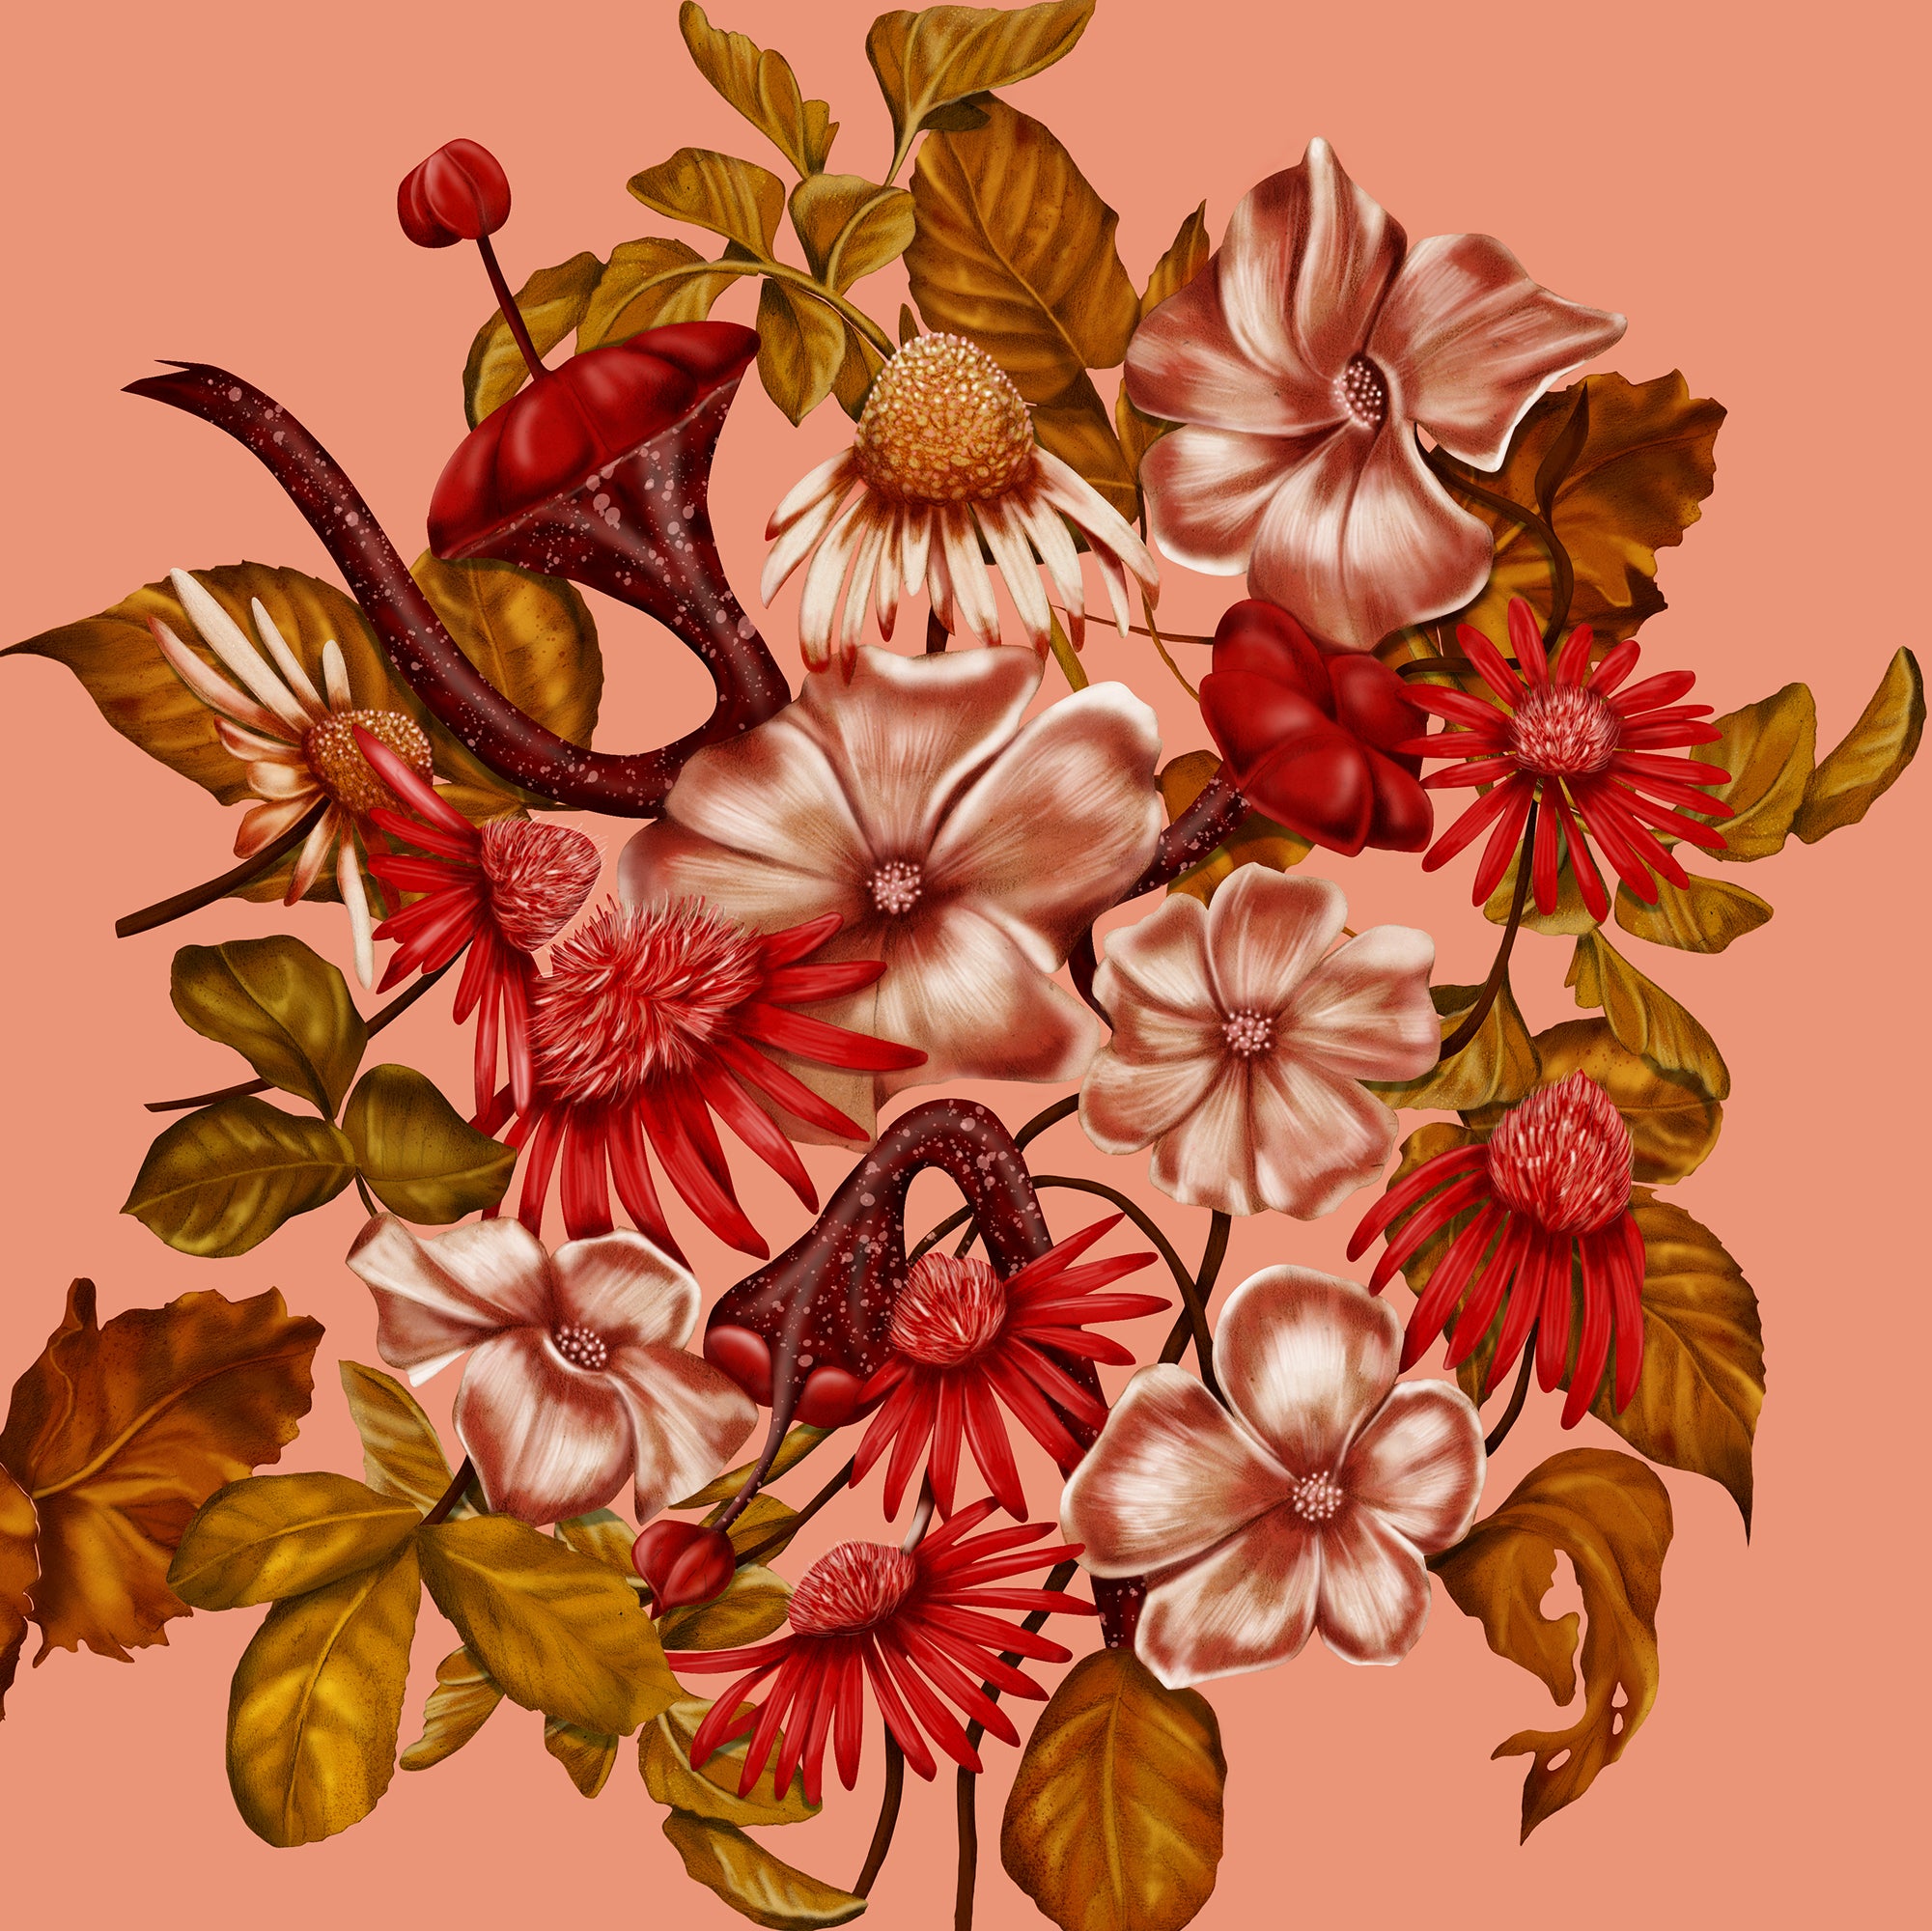 Kelly Thompson botanical illustration, illustrator Melbourne Blunt umbrellas